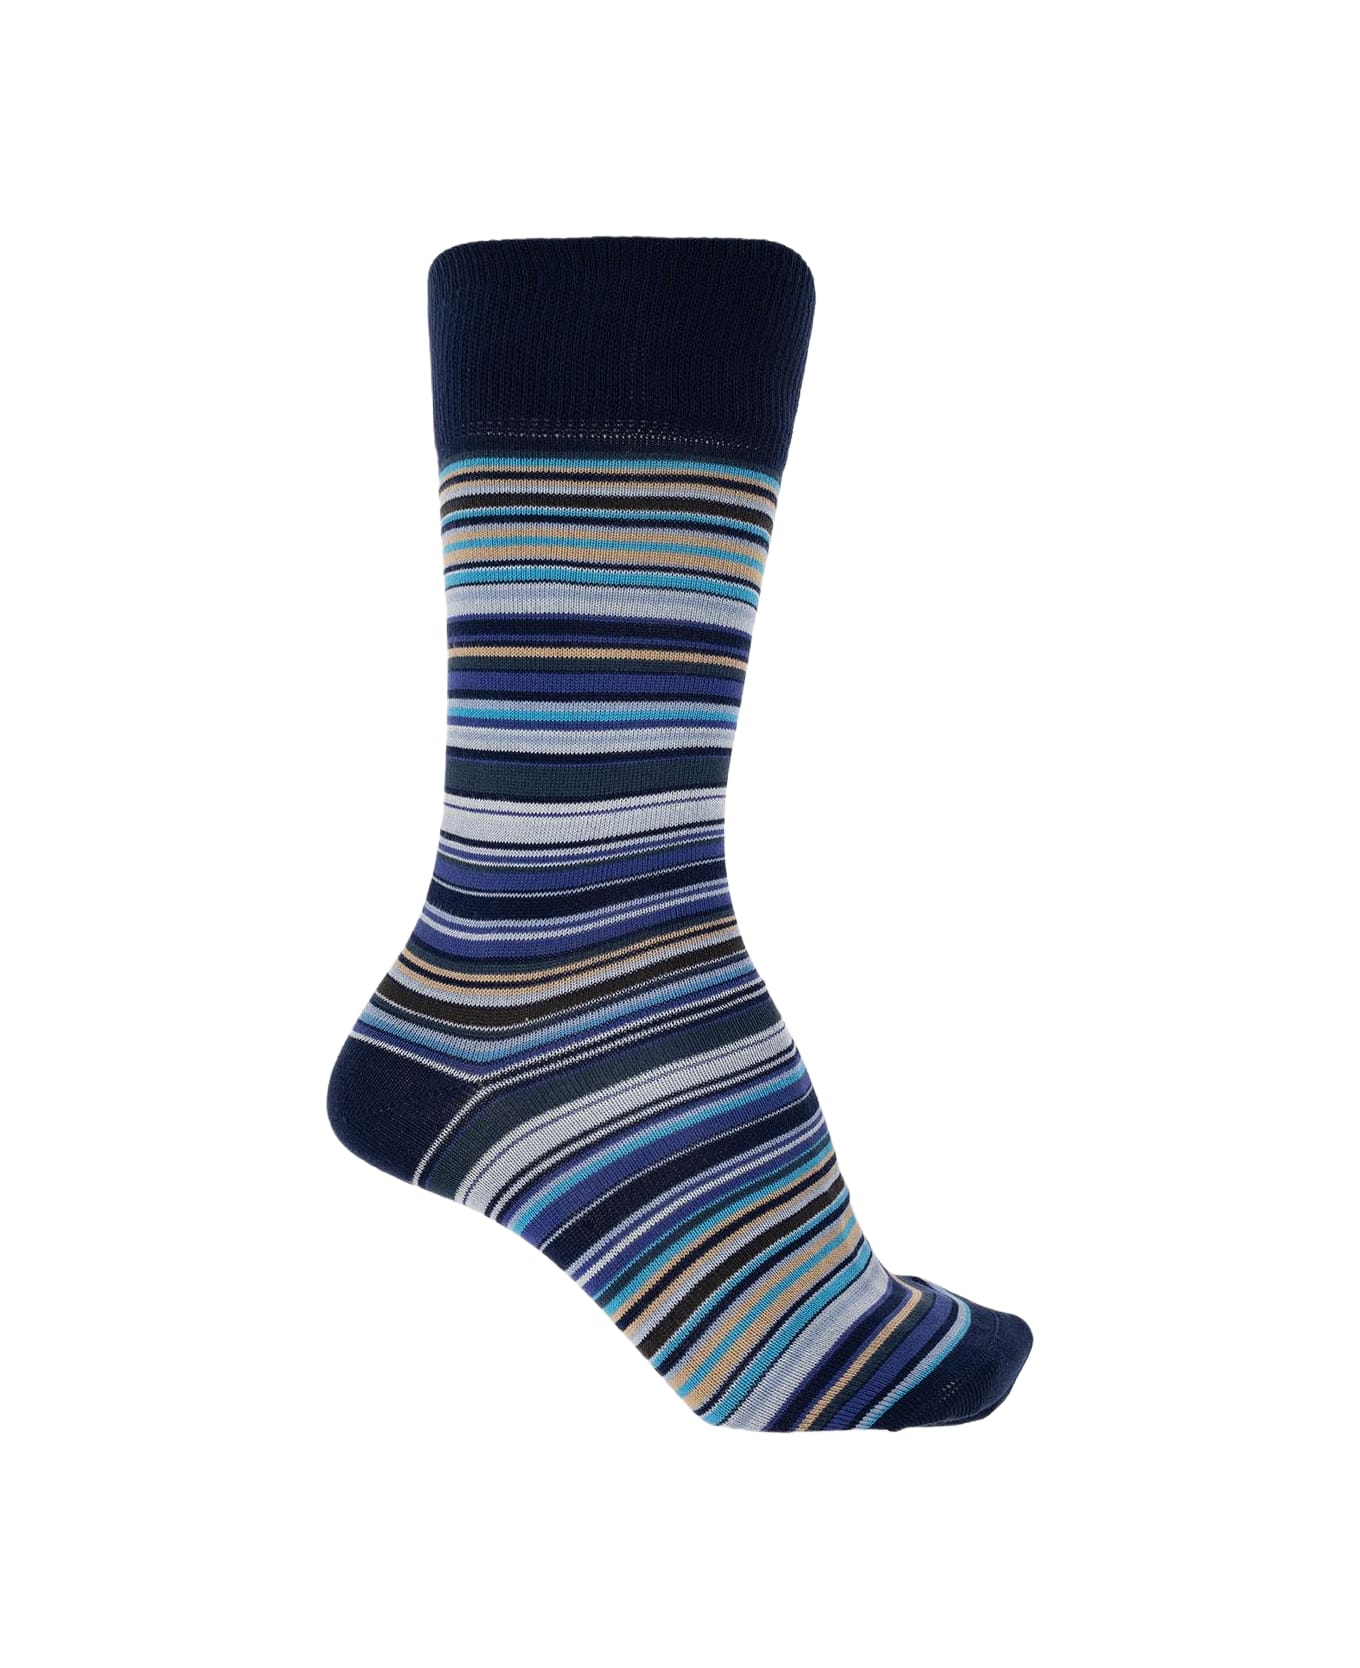 Paul Smith Stripes Socks - NAVY